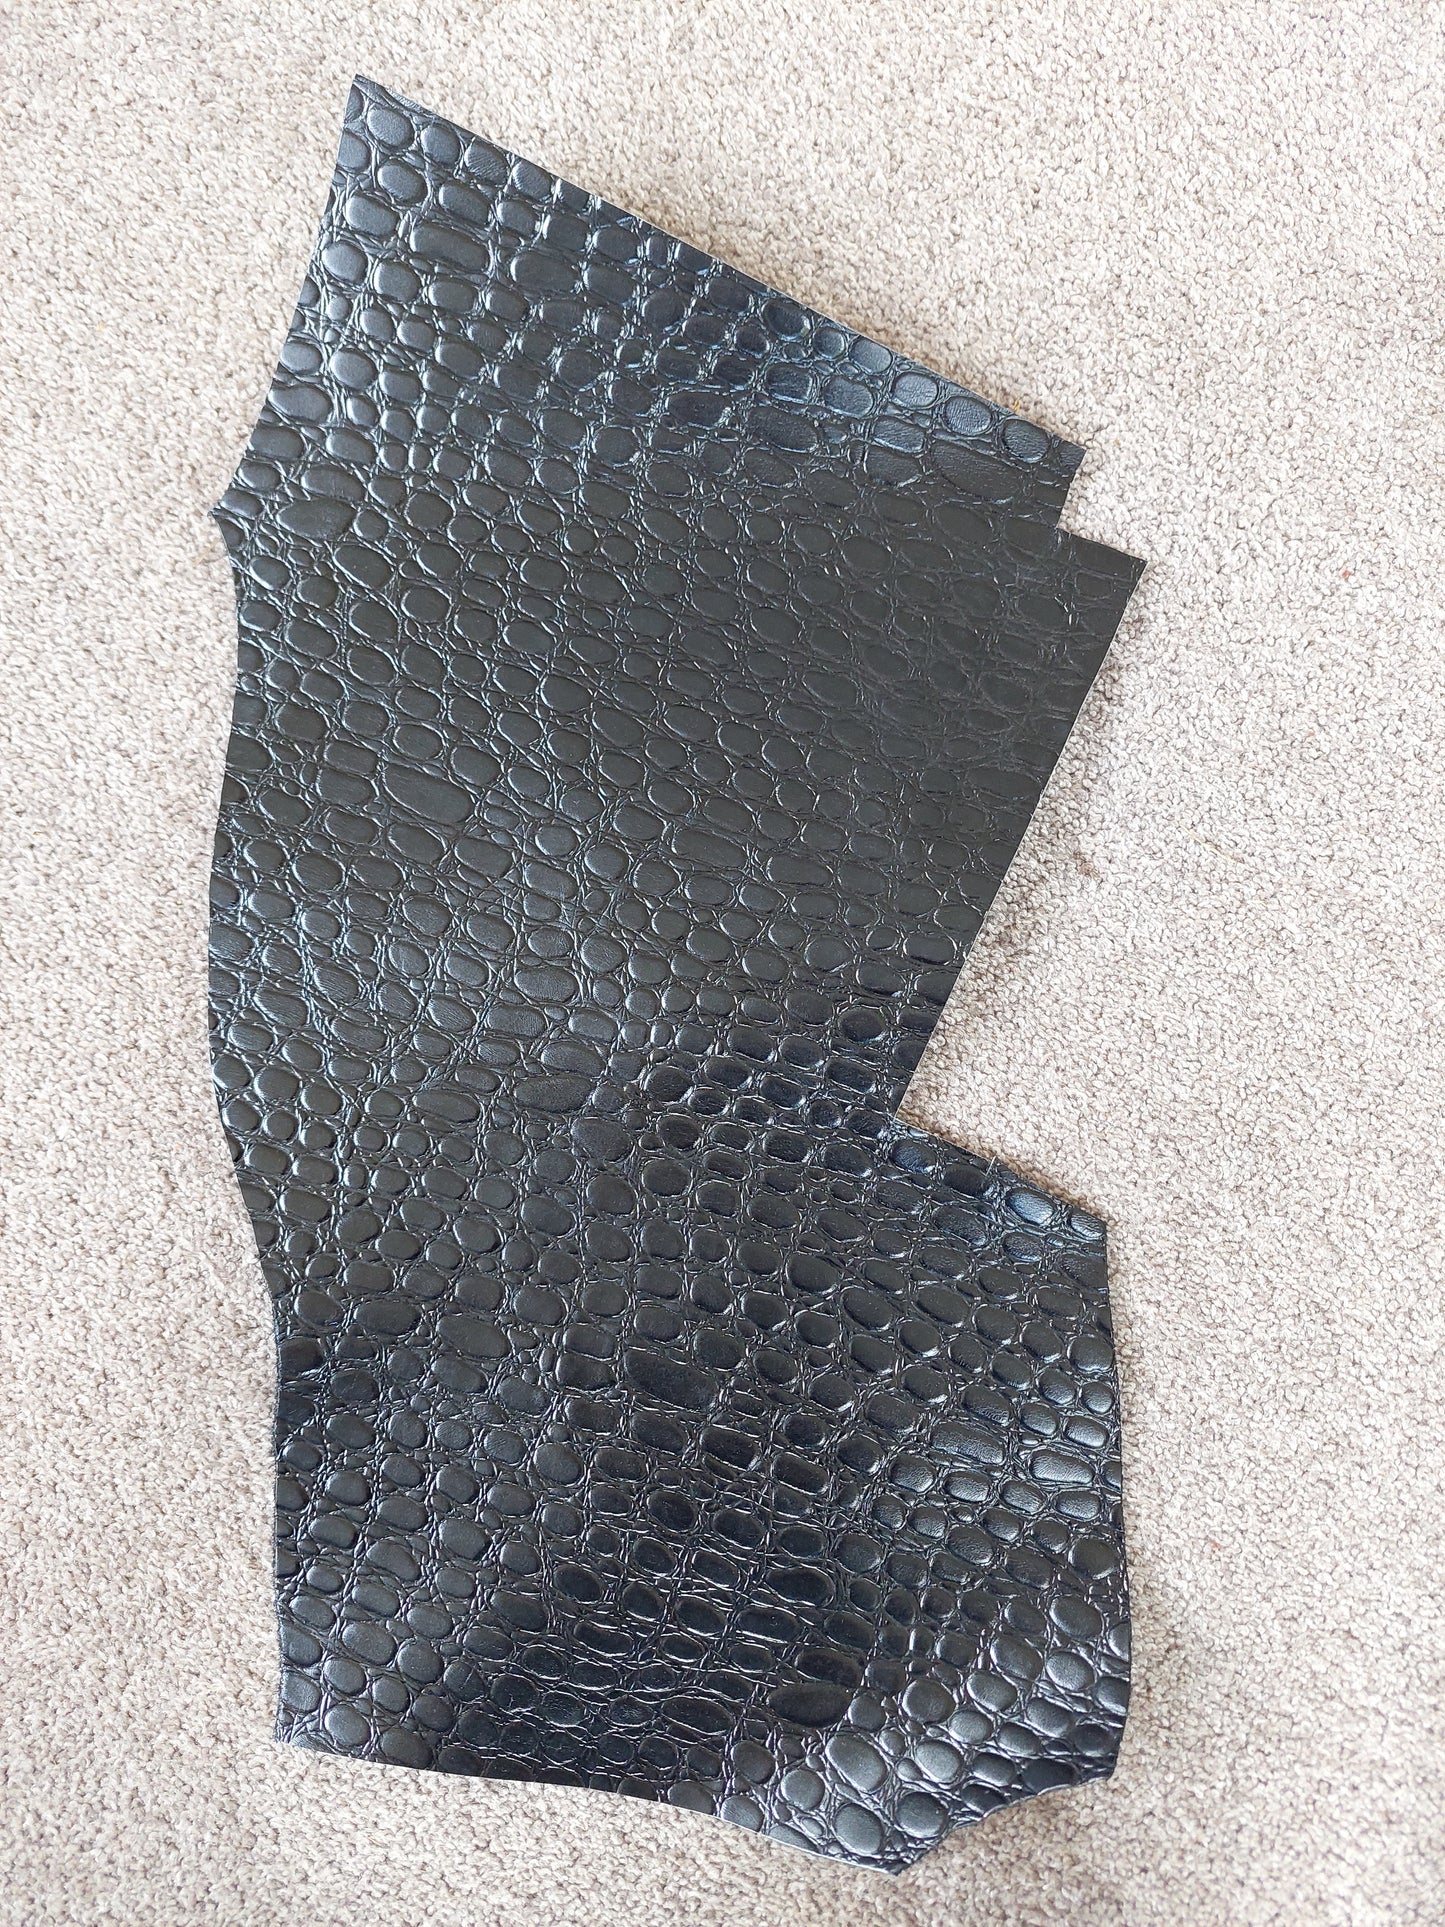 Patterned Black Scrap Leather Piece